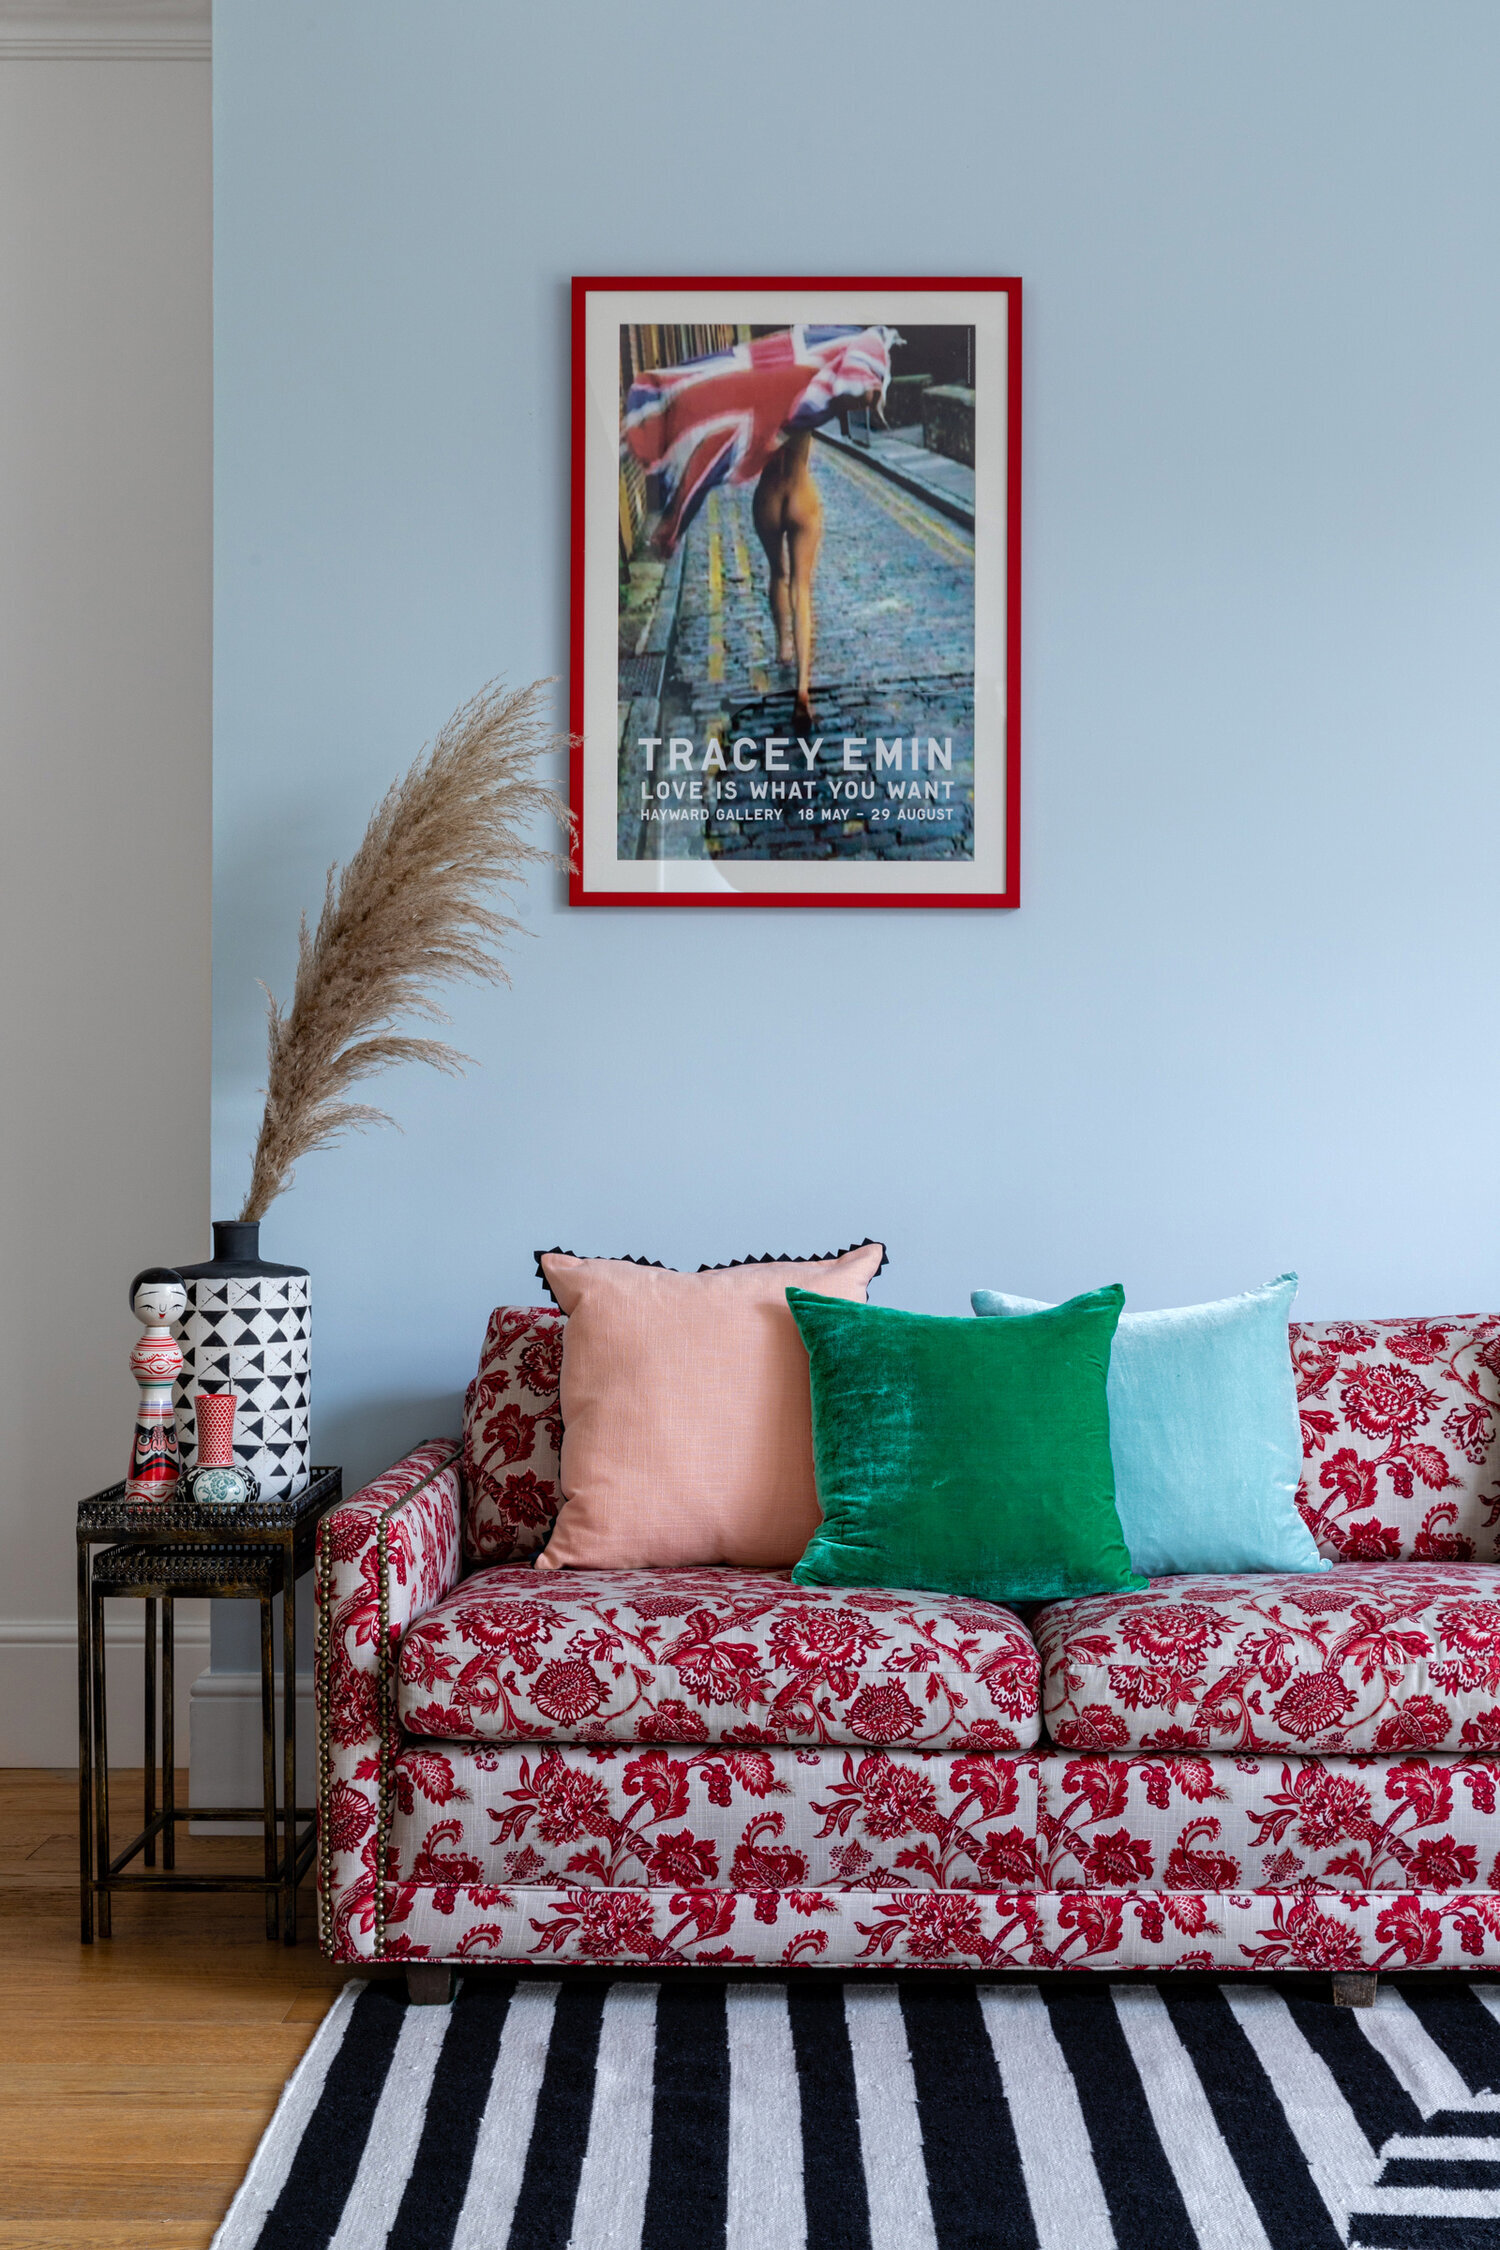 harpenden-02-floral-sofa-tracey-emin-poster.jpg